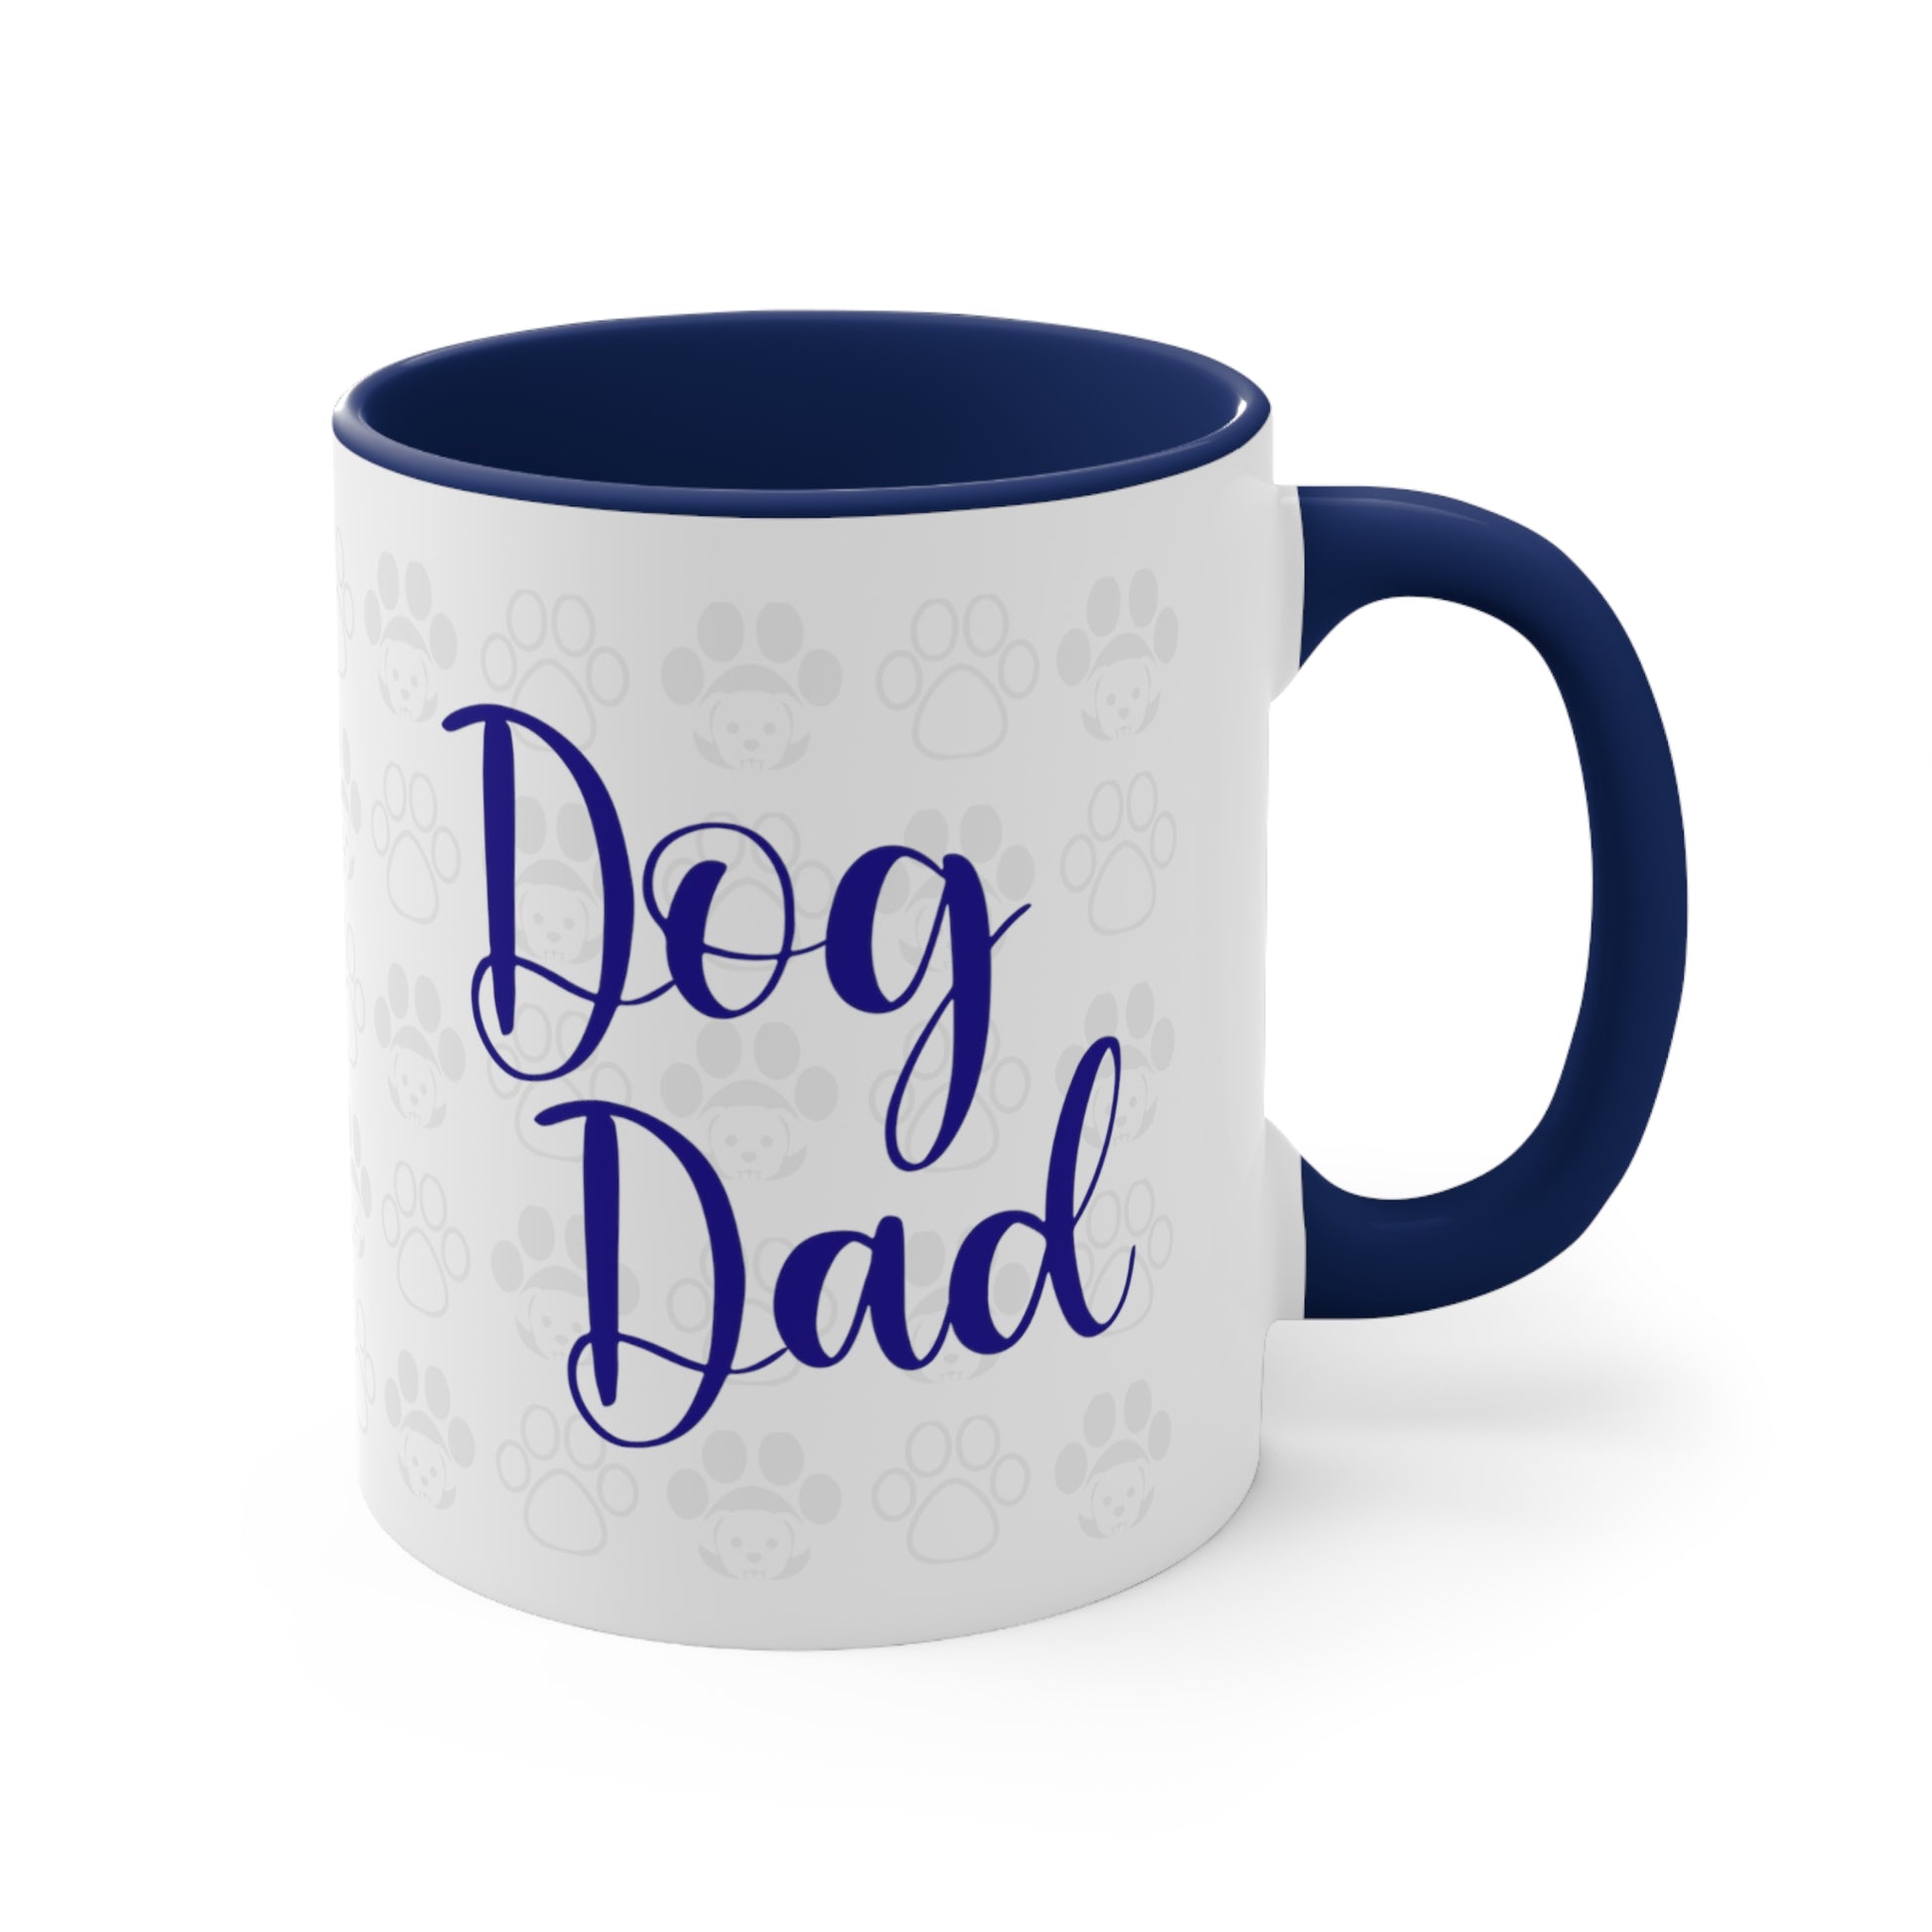 Dog Dad coffee Mug 11 oz, front view in dark blue.